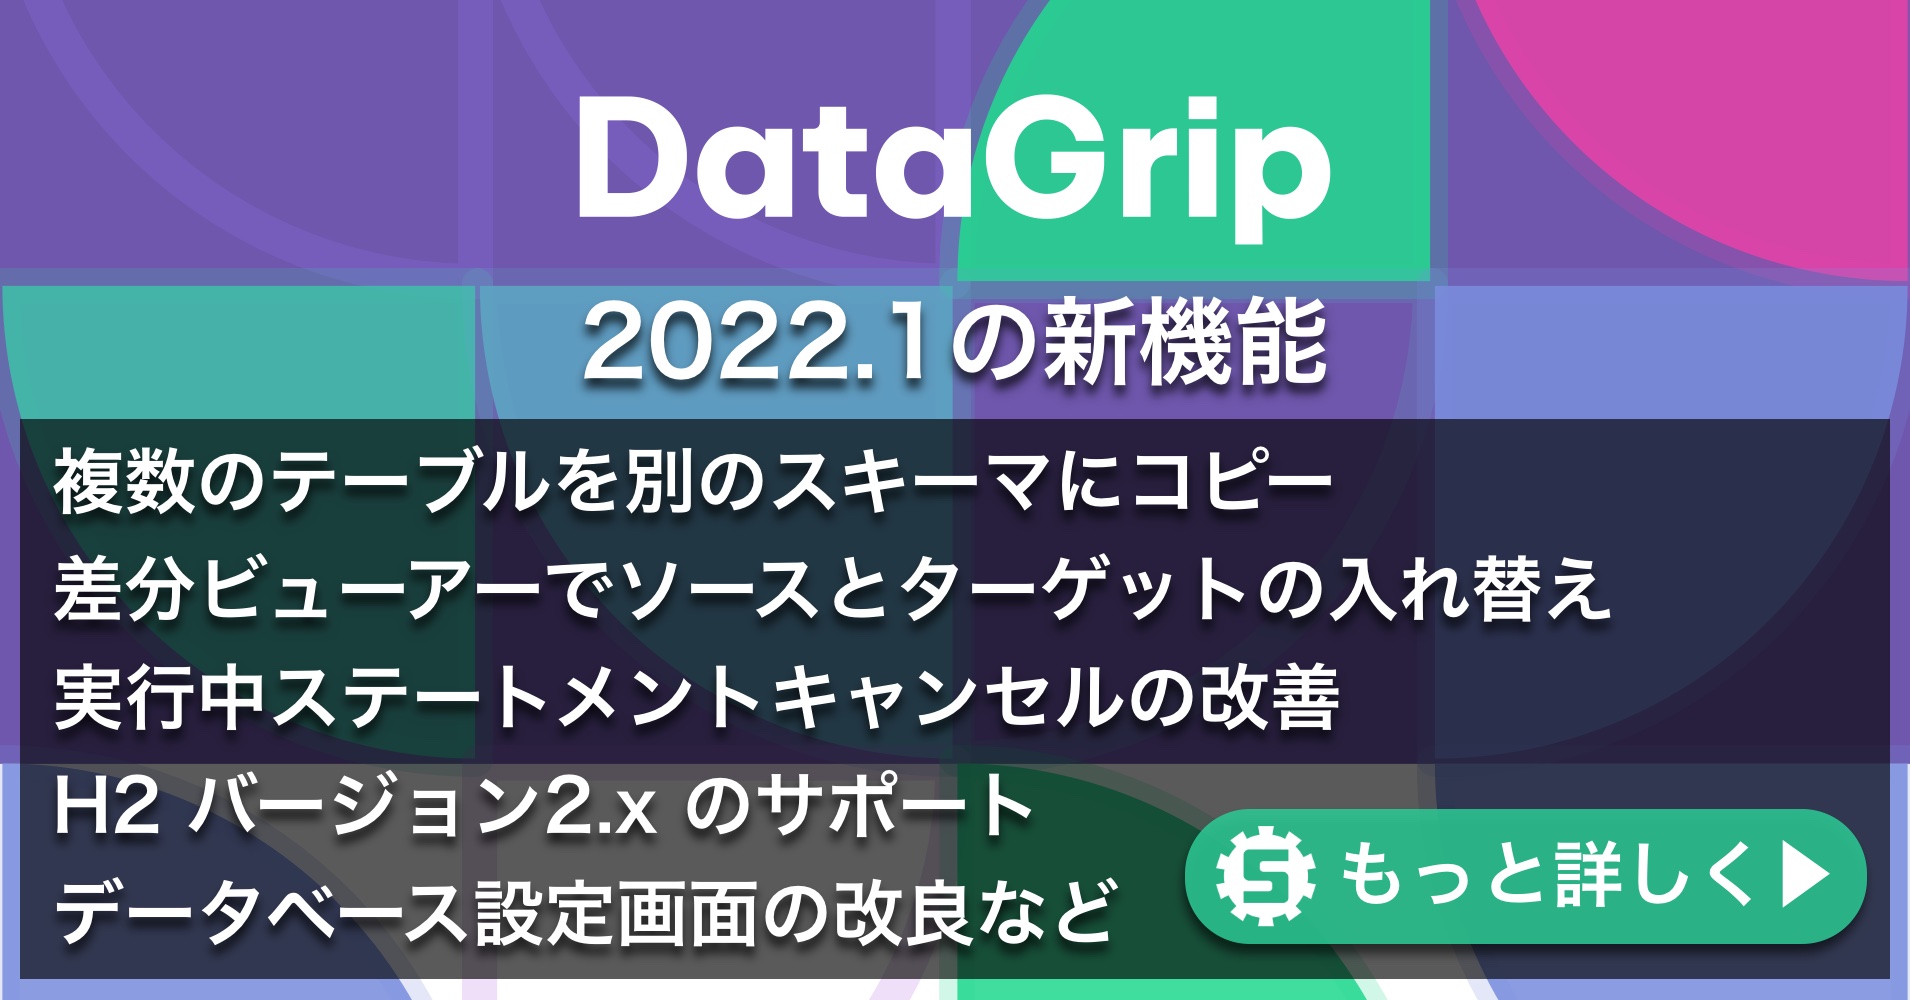 DataGrip 2022.1の新機能